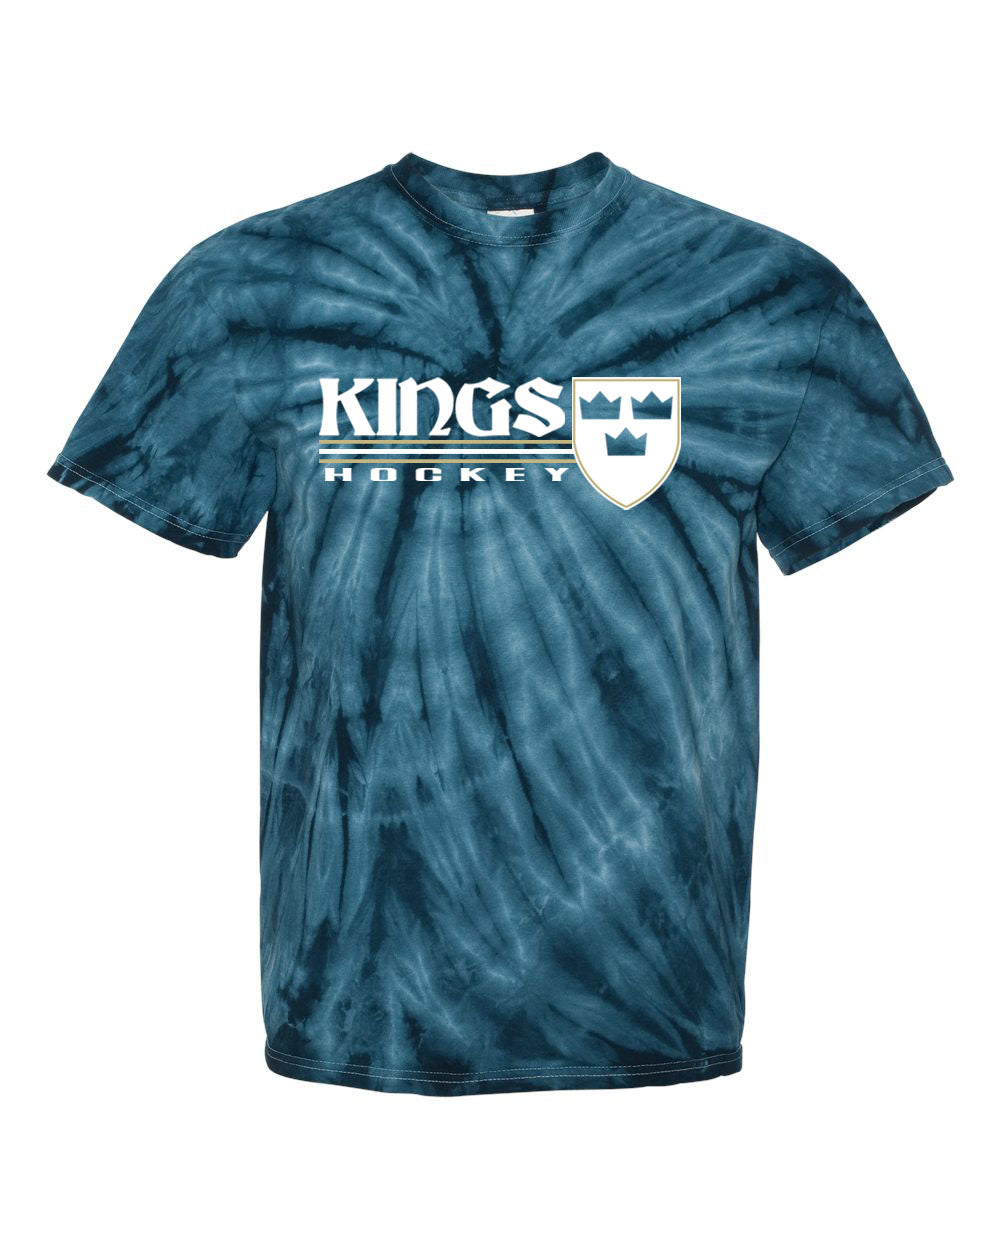 Kings Hockey Tie Dye t-shirt Design 3